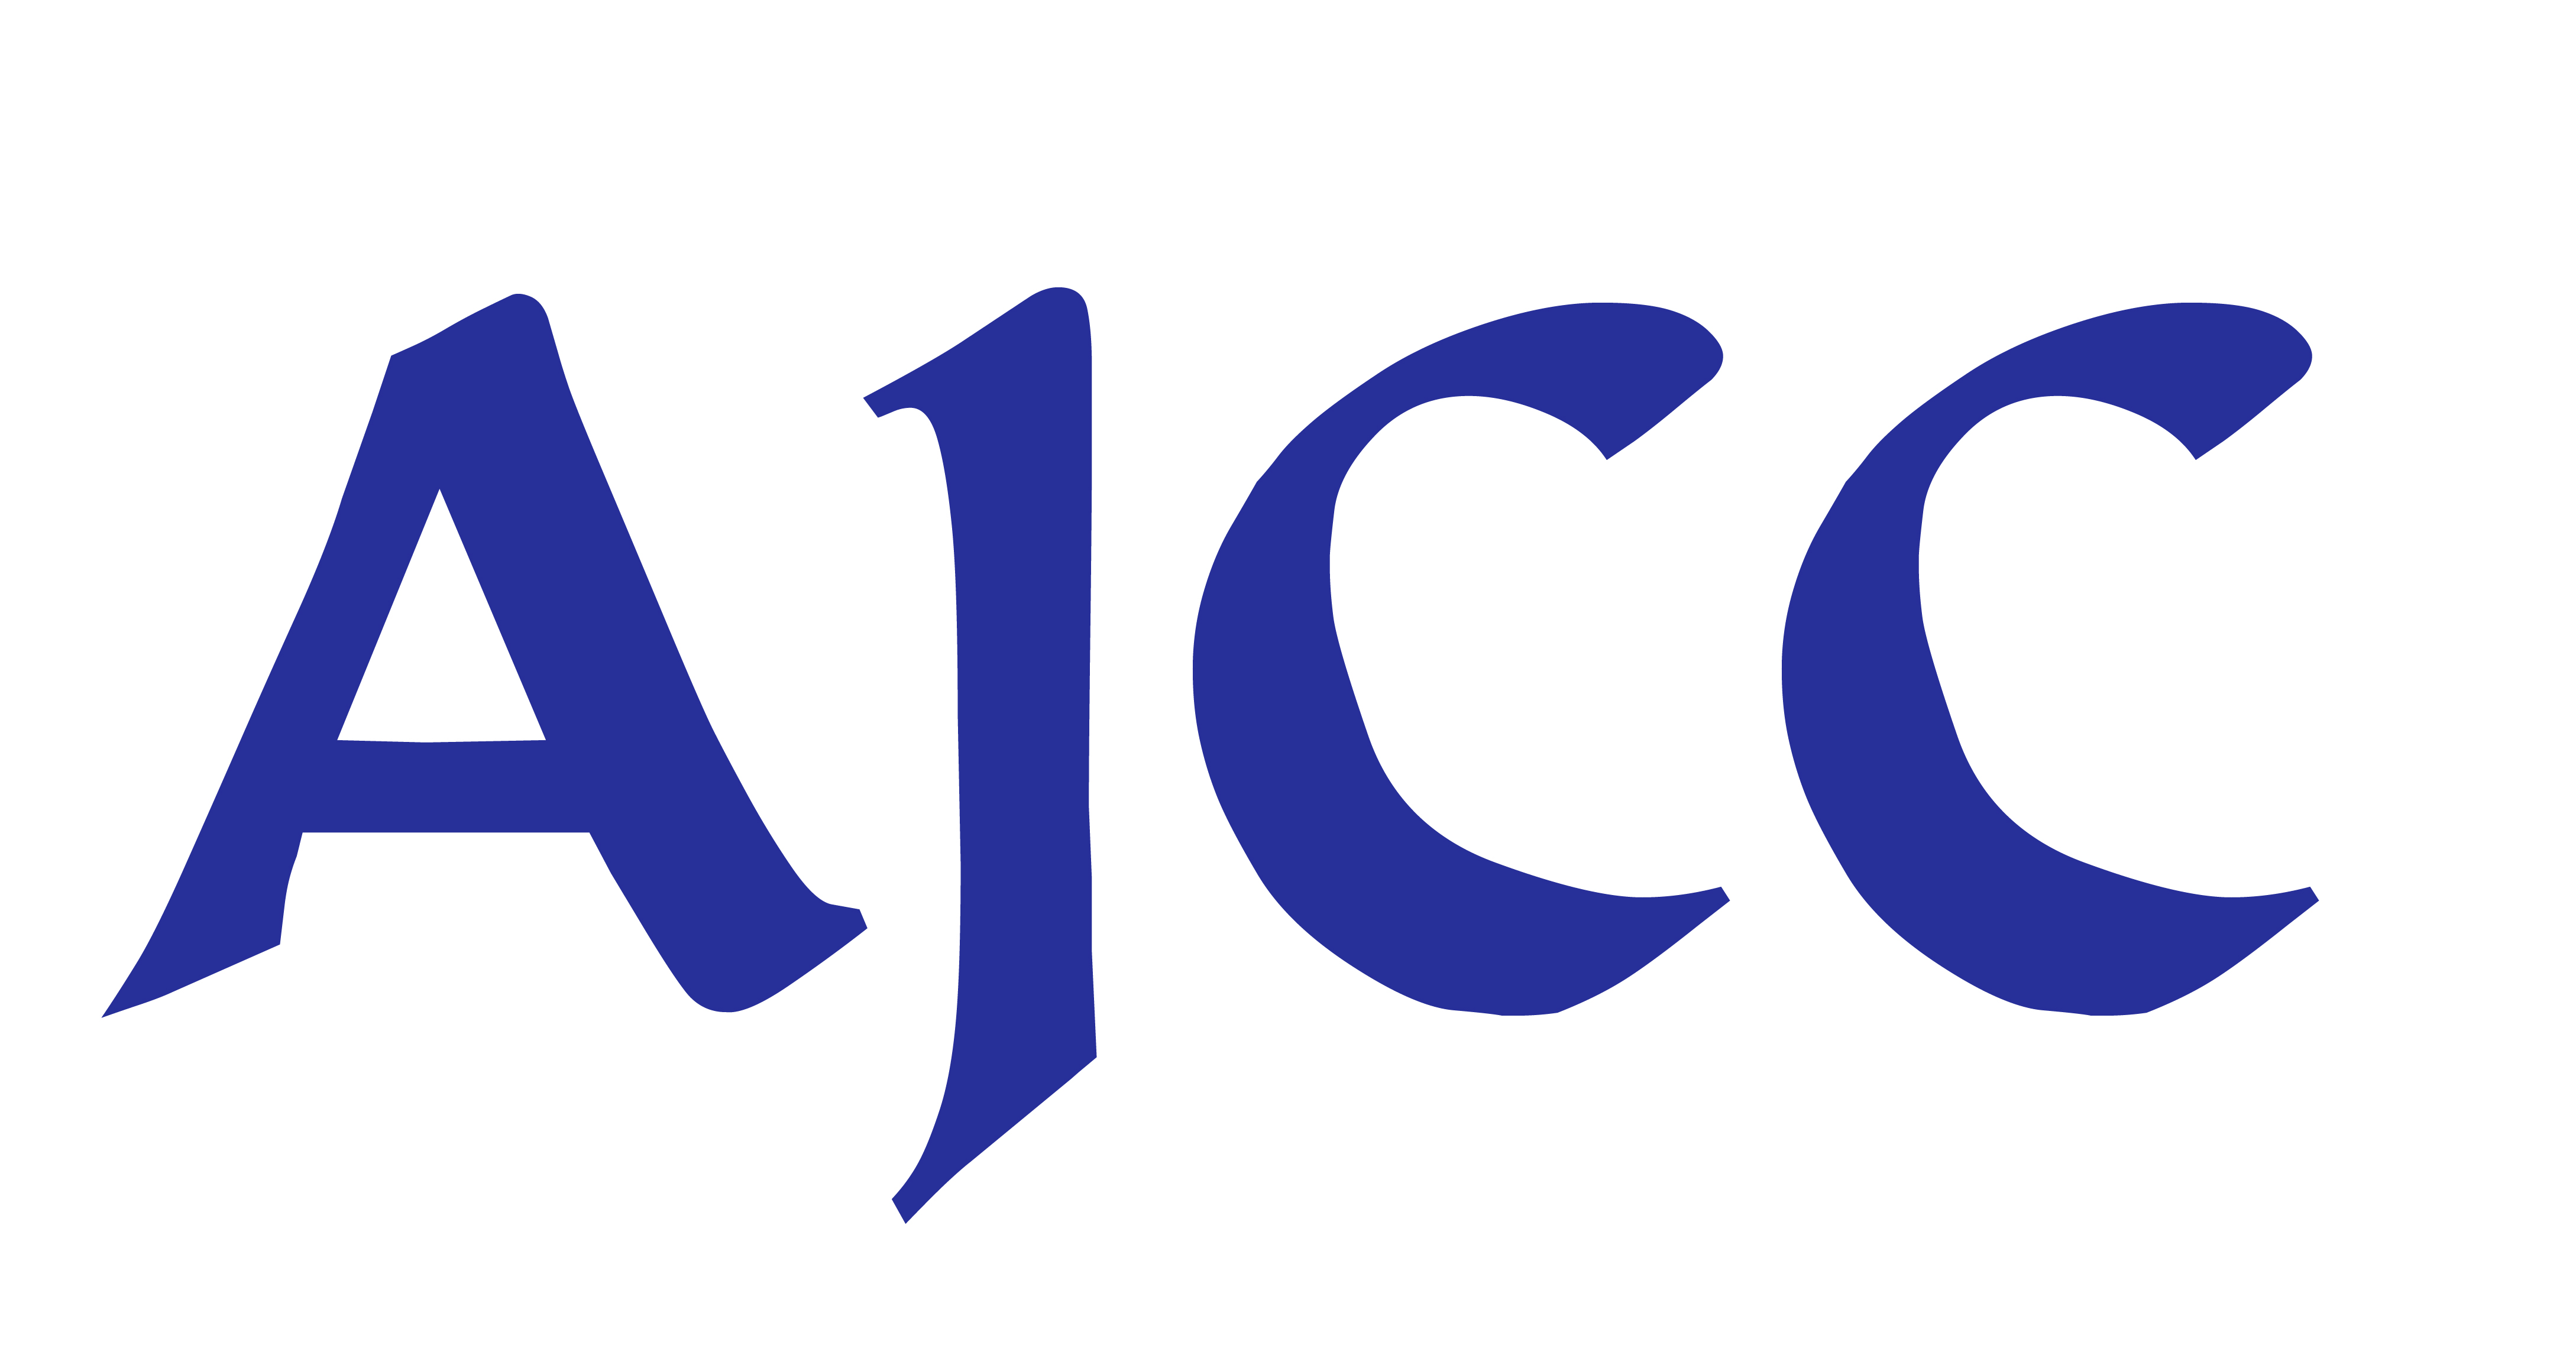 AJCC projectmanagement en handelsonderneming